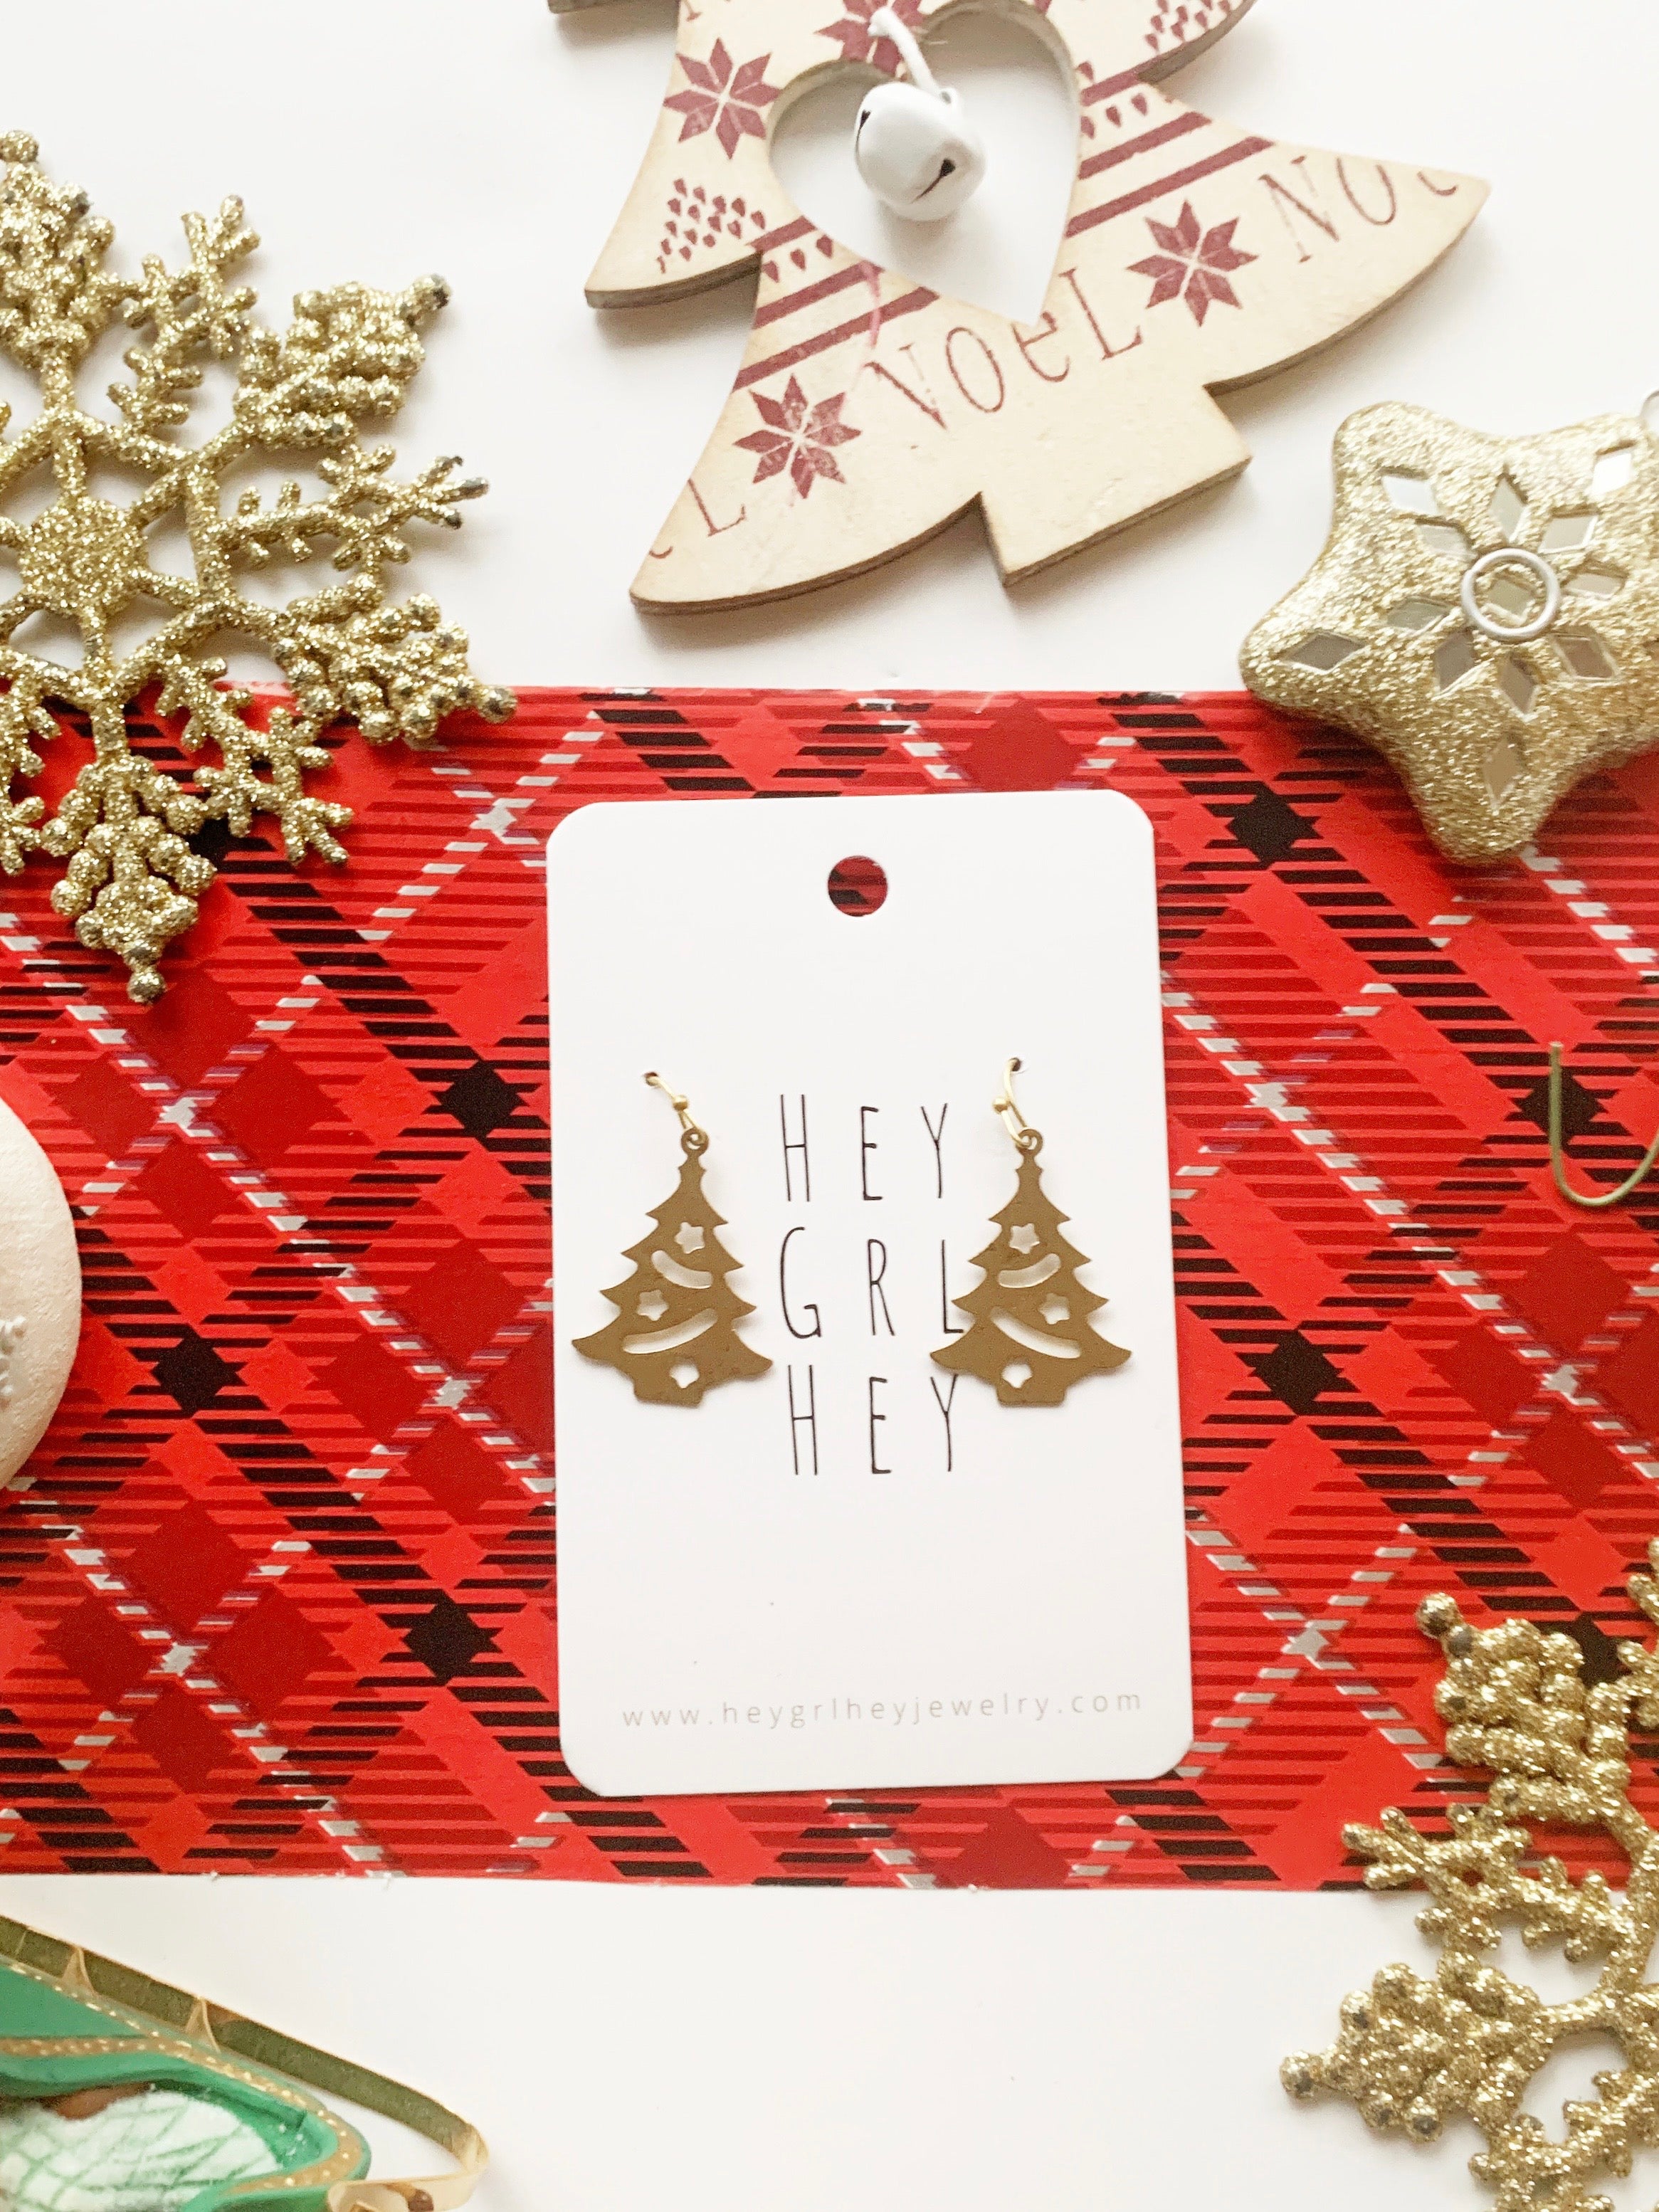 The Brass Christmas Tree Earrings